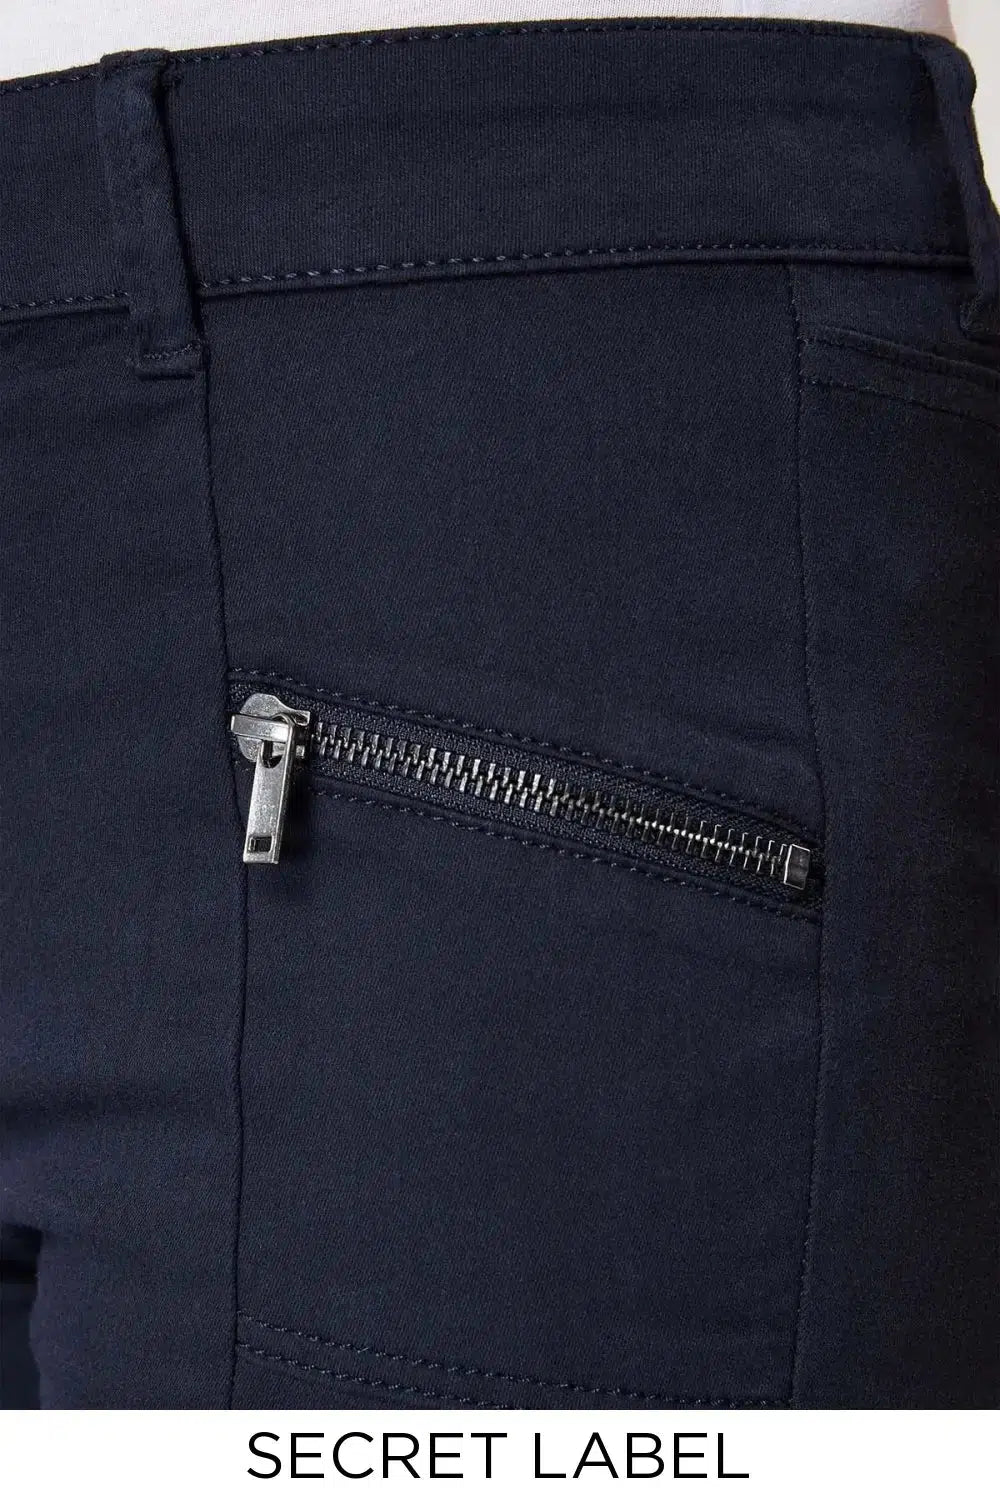 Secret Label Soft Touch Skinny Zip Trousers Navy / 6 / Short